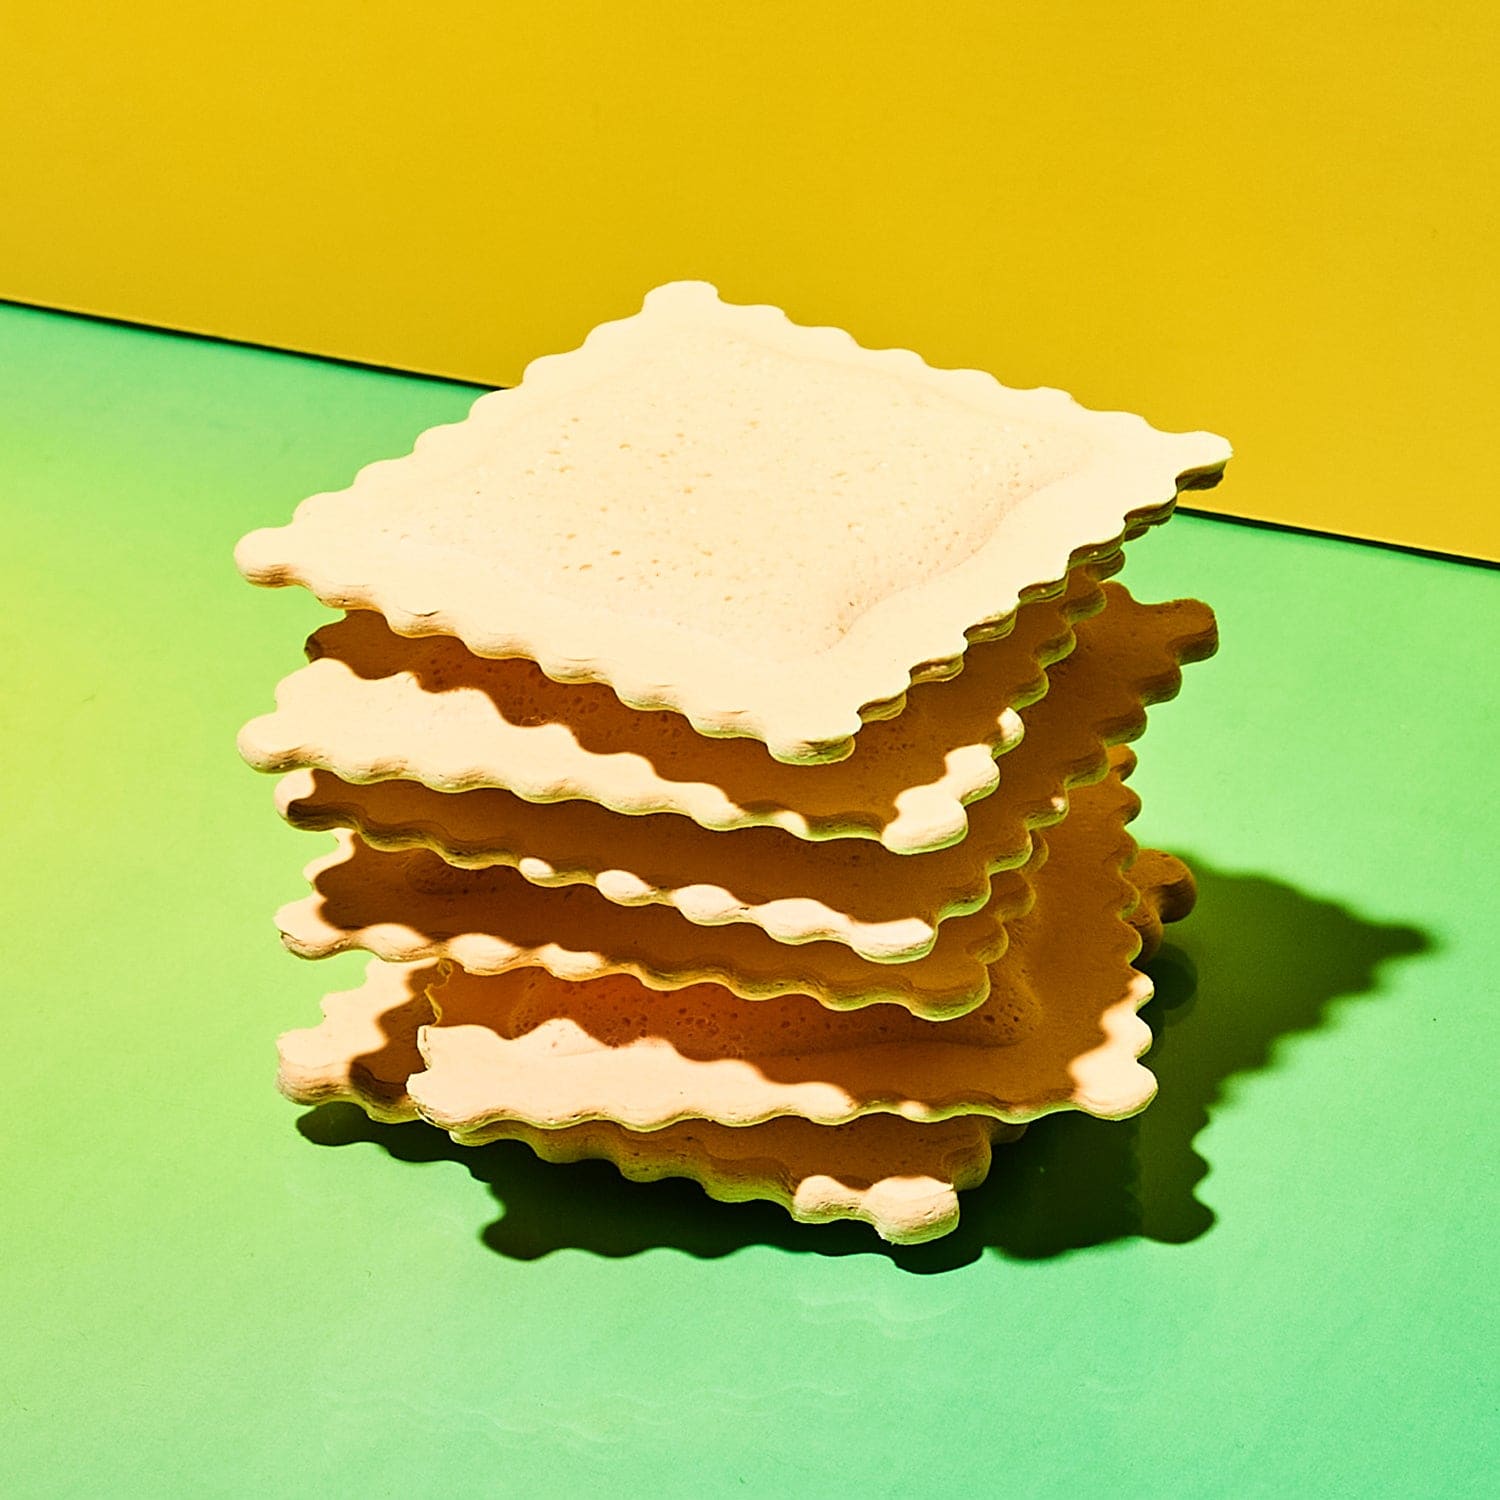 https://cdn.shopify.com/s/files/1/2636/1058/files/ravioli-shaped-sponges-food-novelty-kitchen-decor-kitchenware-pasta-spongioli-834.jpg